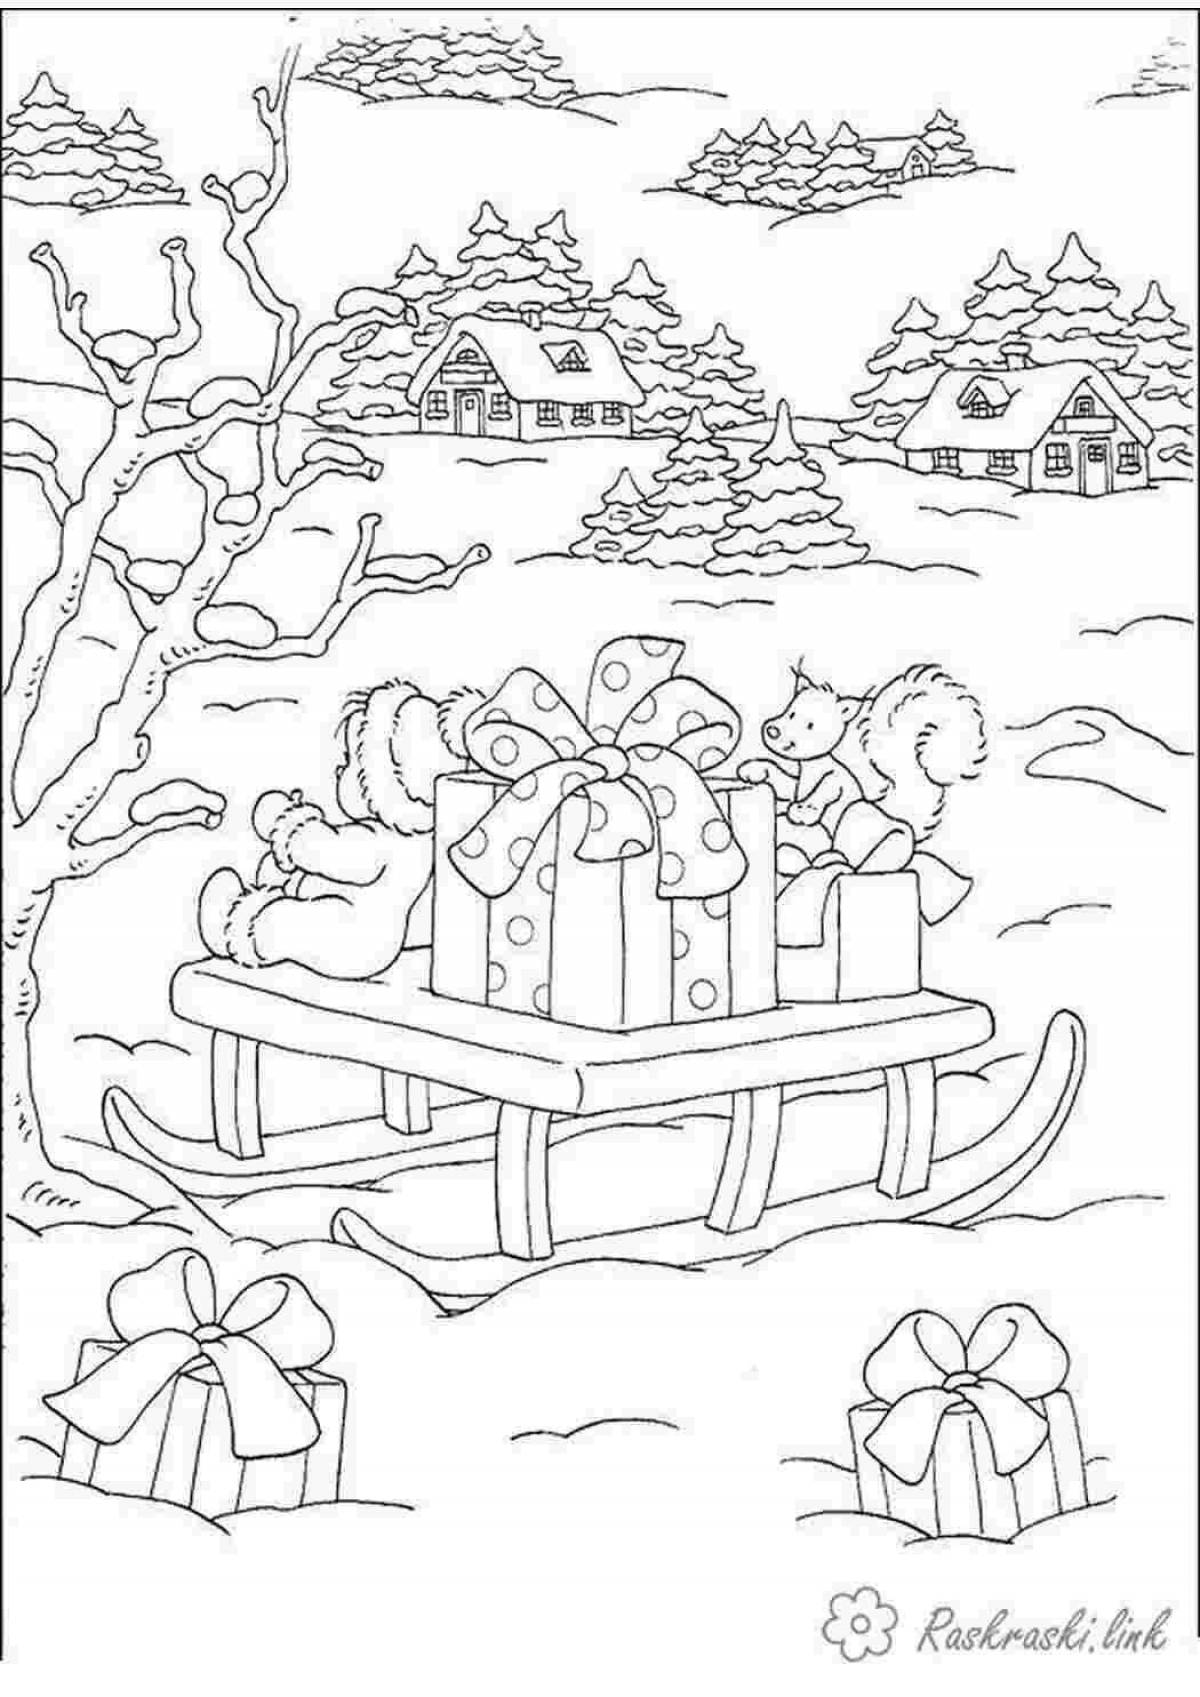 Scenic village in winter coloring book